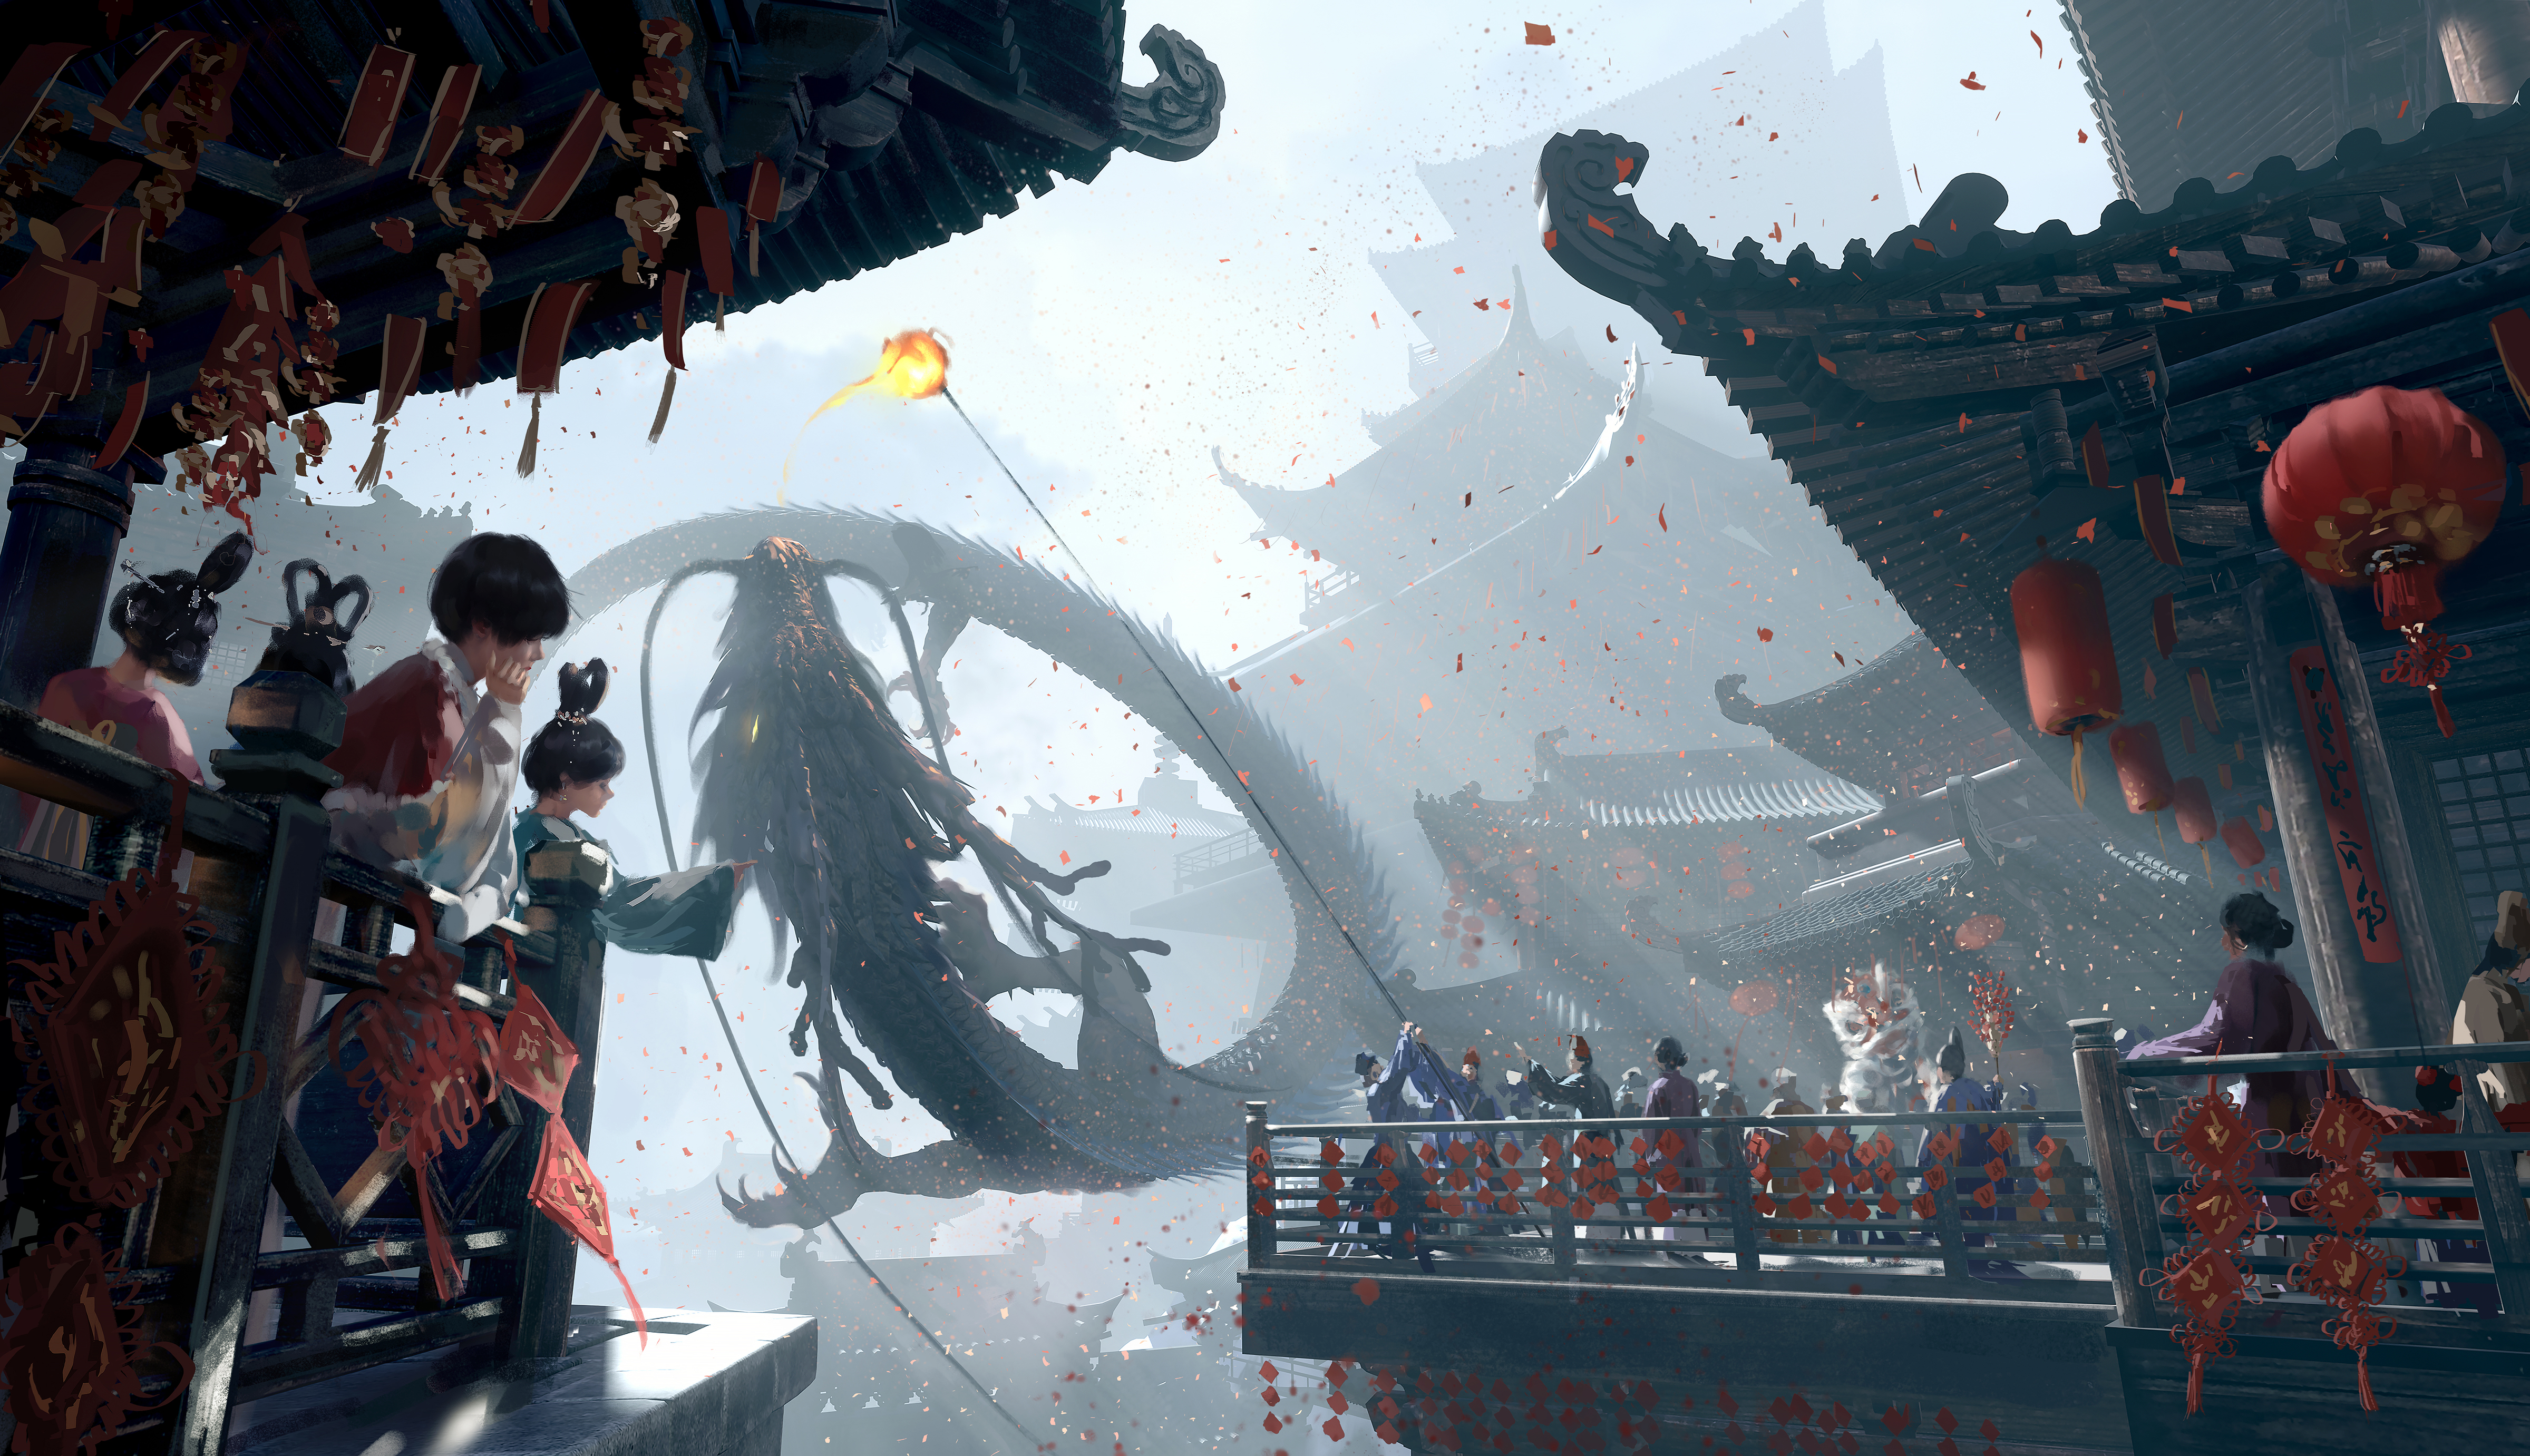 WLOP Digital Art Artwork Illustration Fantasy Art Dragon Architecture China Crowds Holiday Chinese D 4800x2763